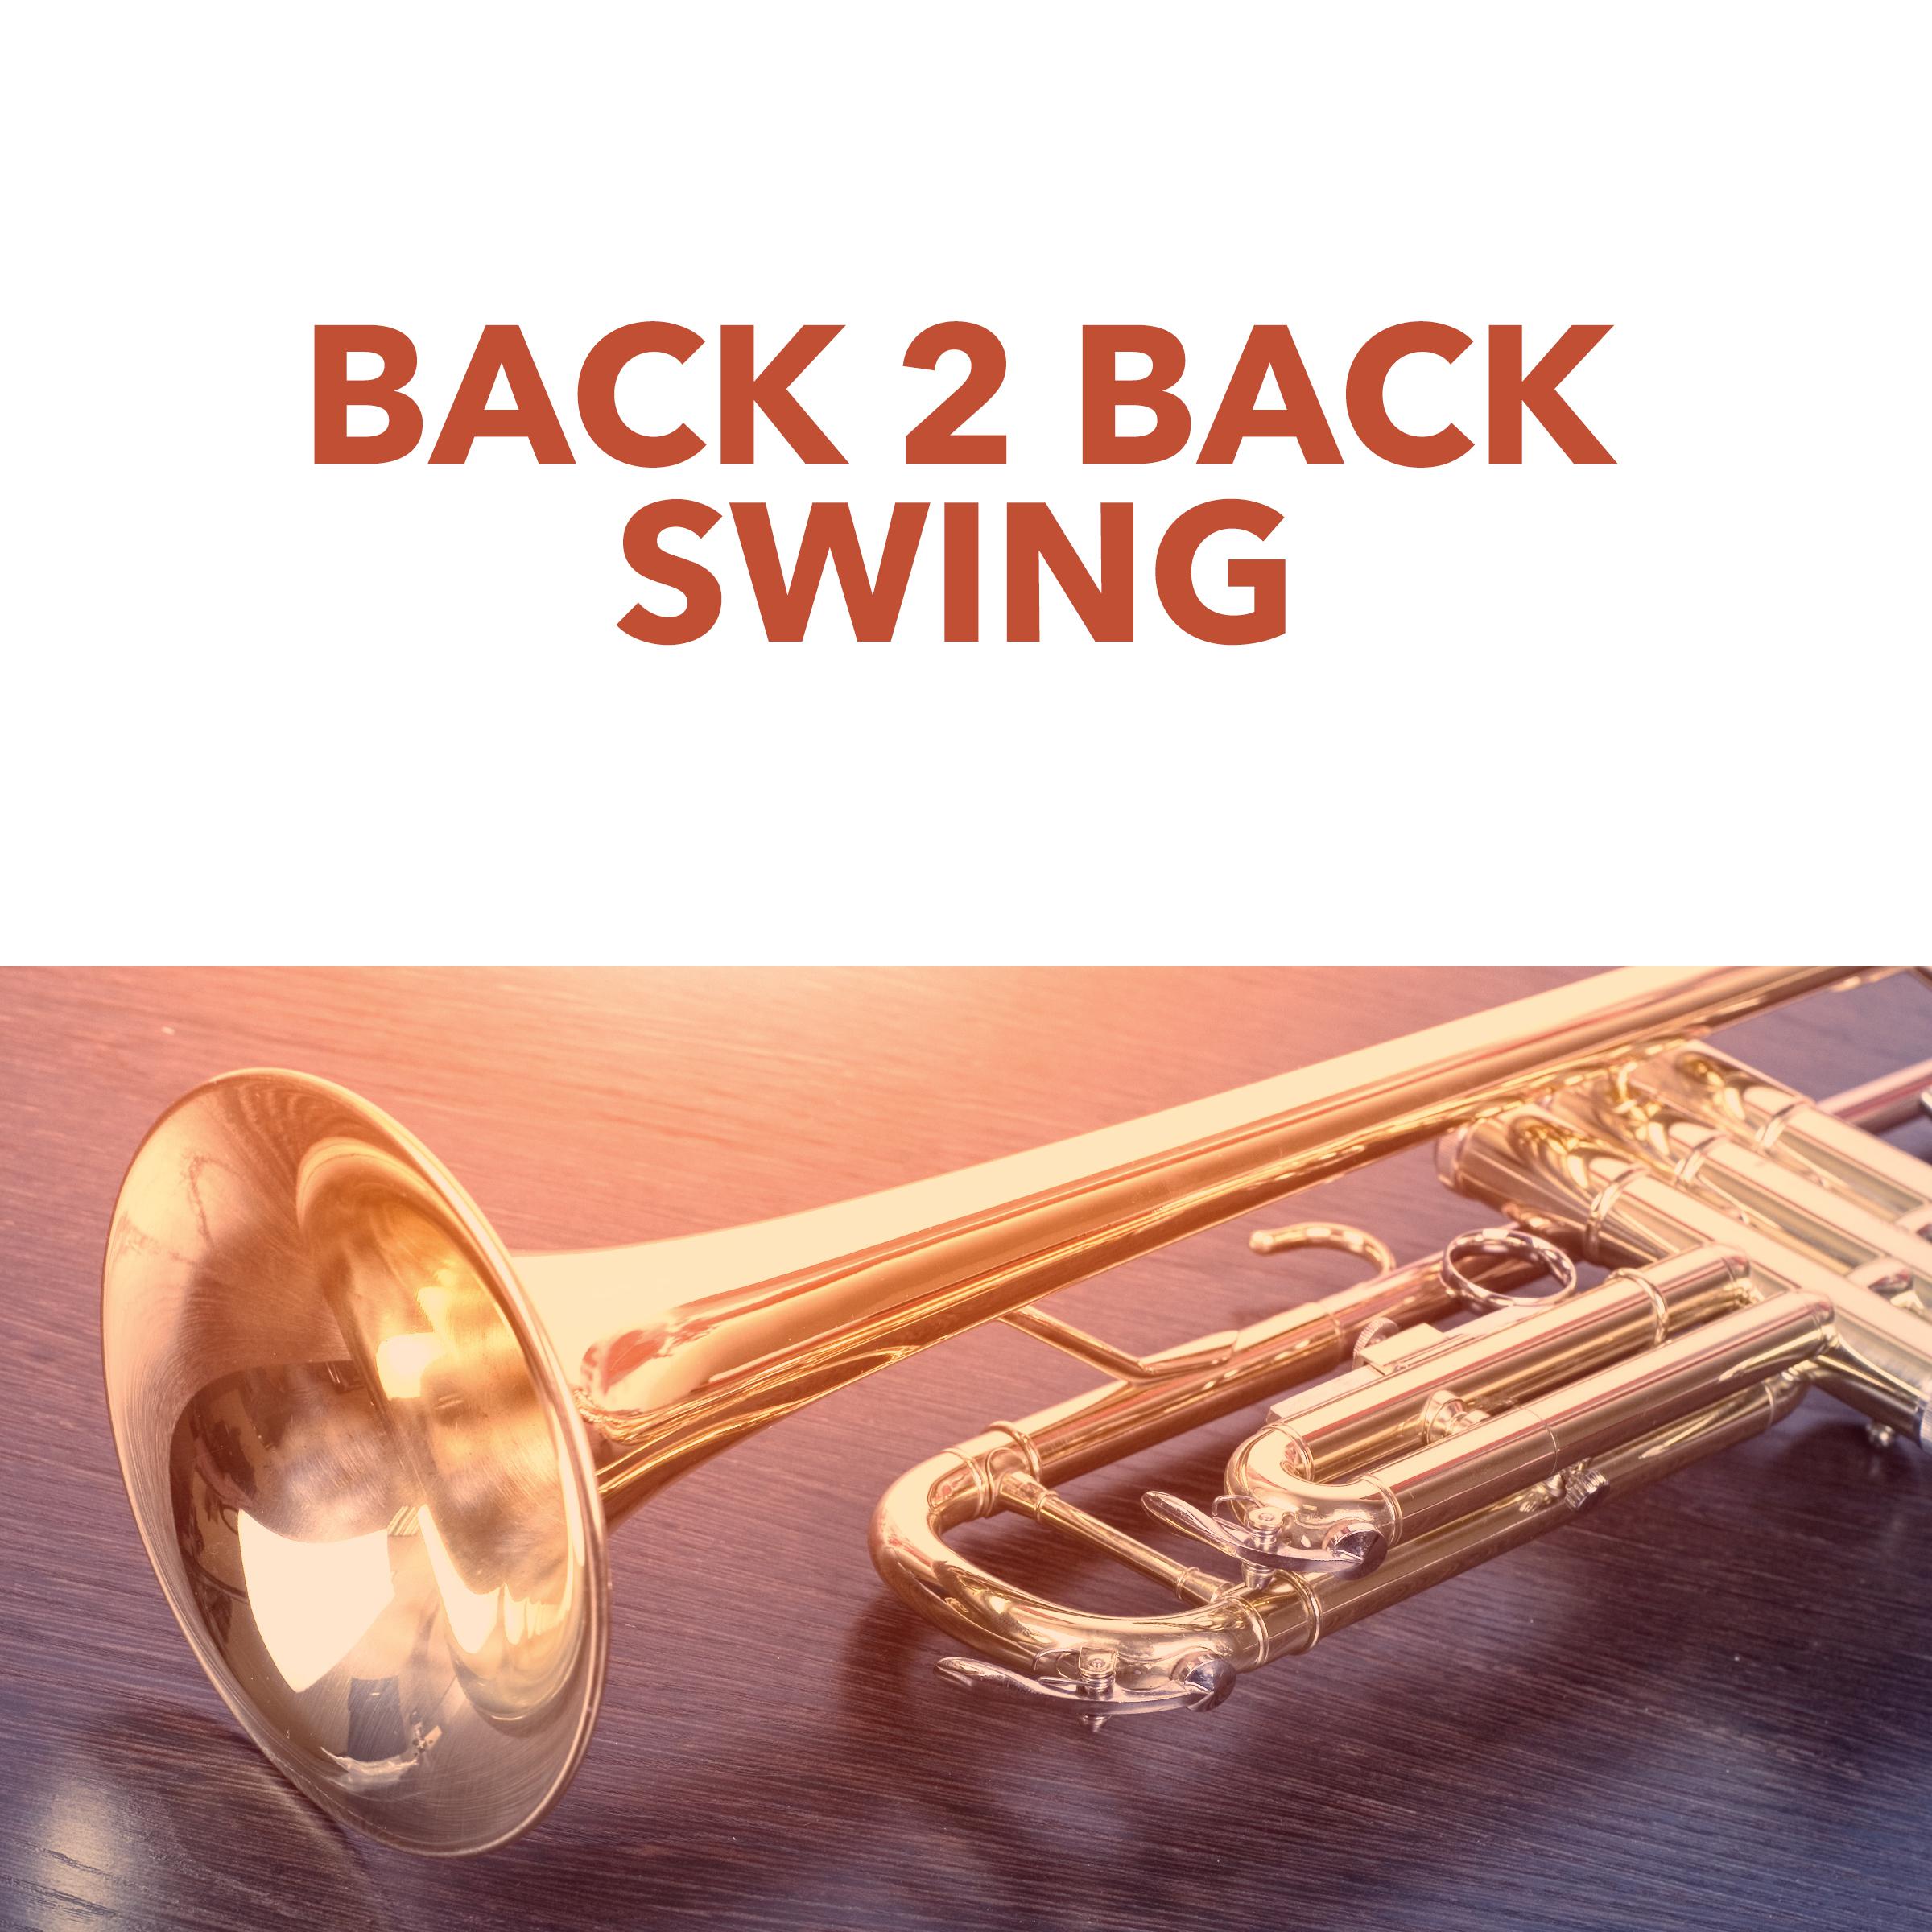 Back 2 Back Swing